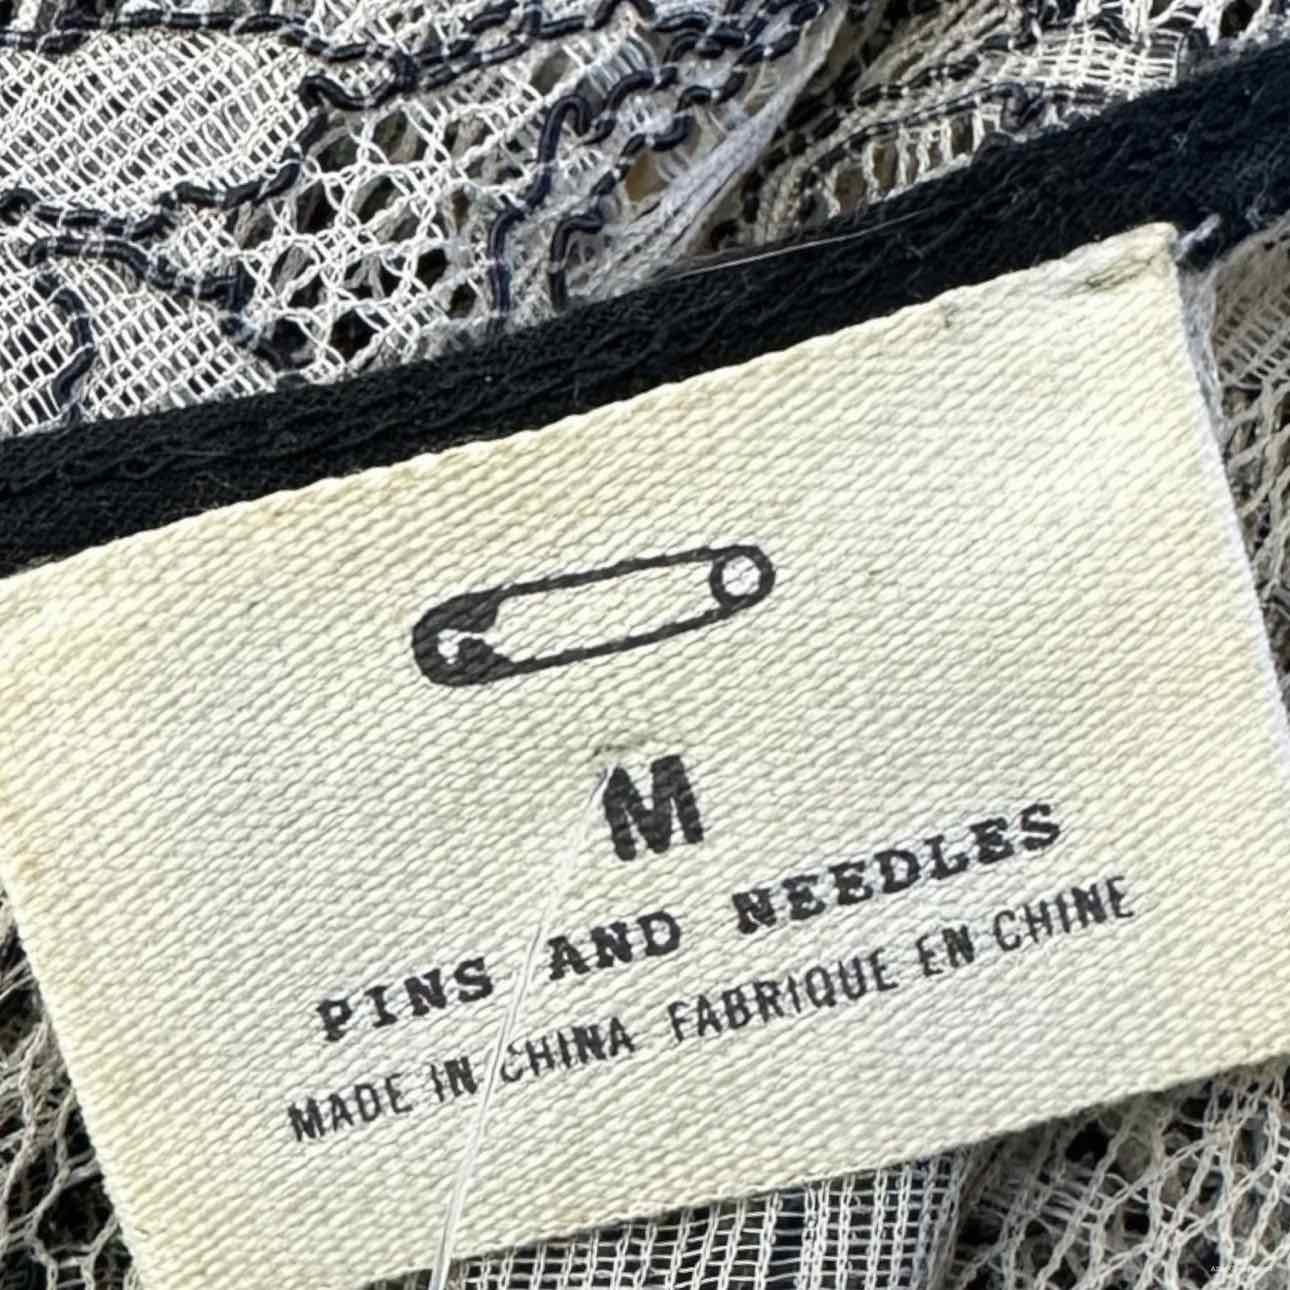 Pins & Needles Tan Floral Lace Top Size M